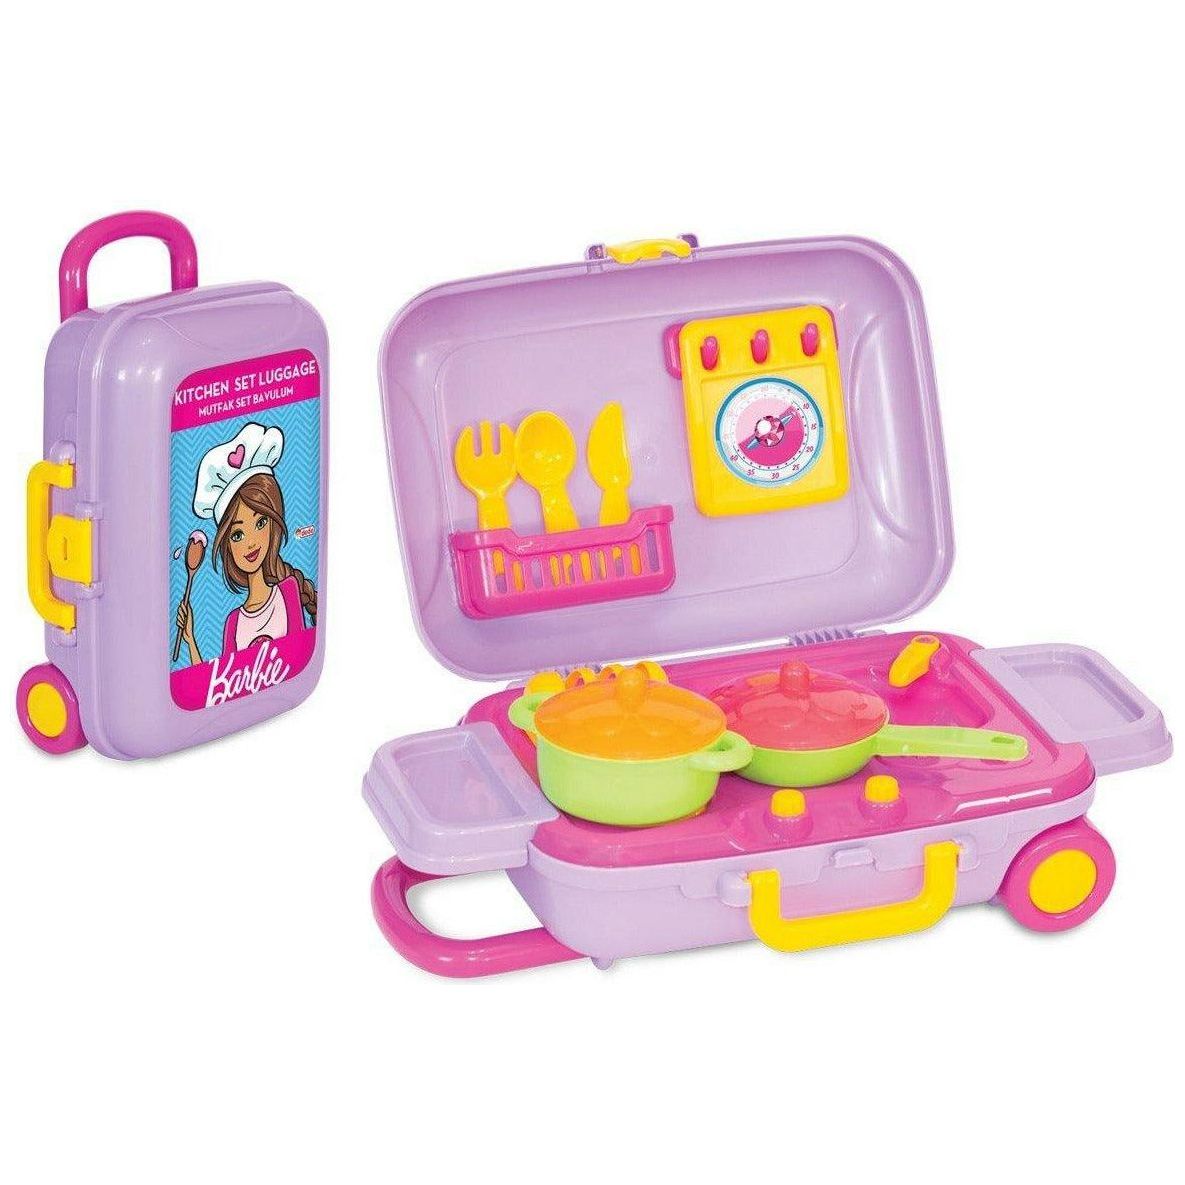 Dede 3478 Barbie Kitchen Set Luggage - BumbleToys - 5-7 Years, Barbie, Cecil, Girls, Kitchen & Play Sets